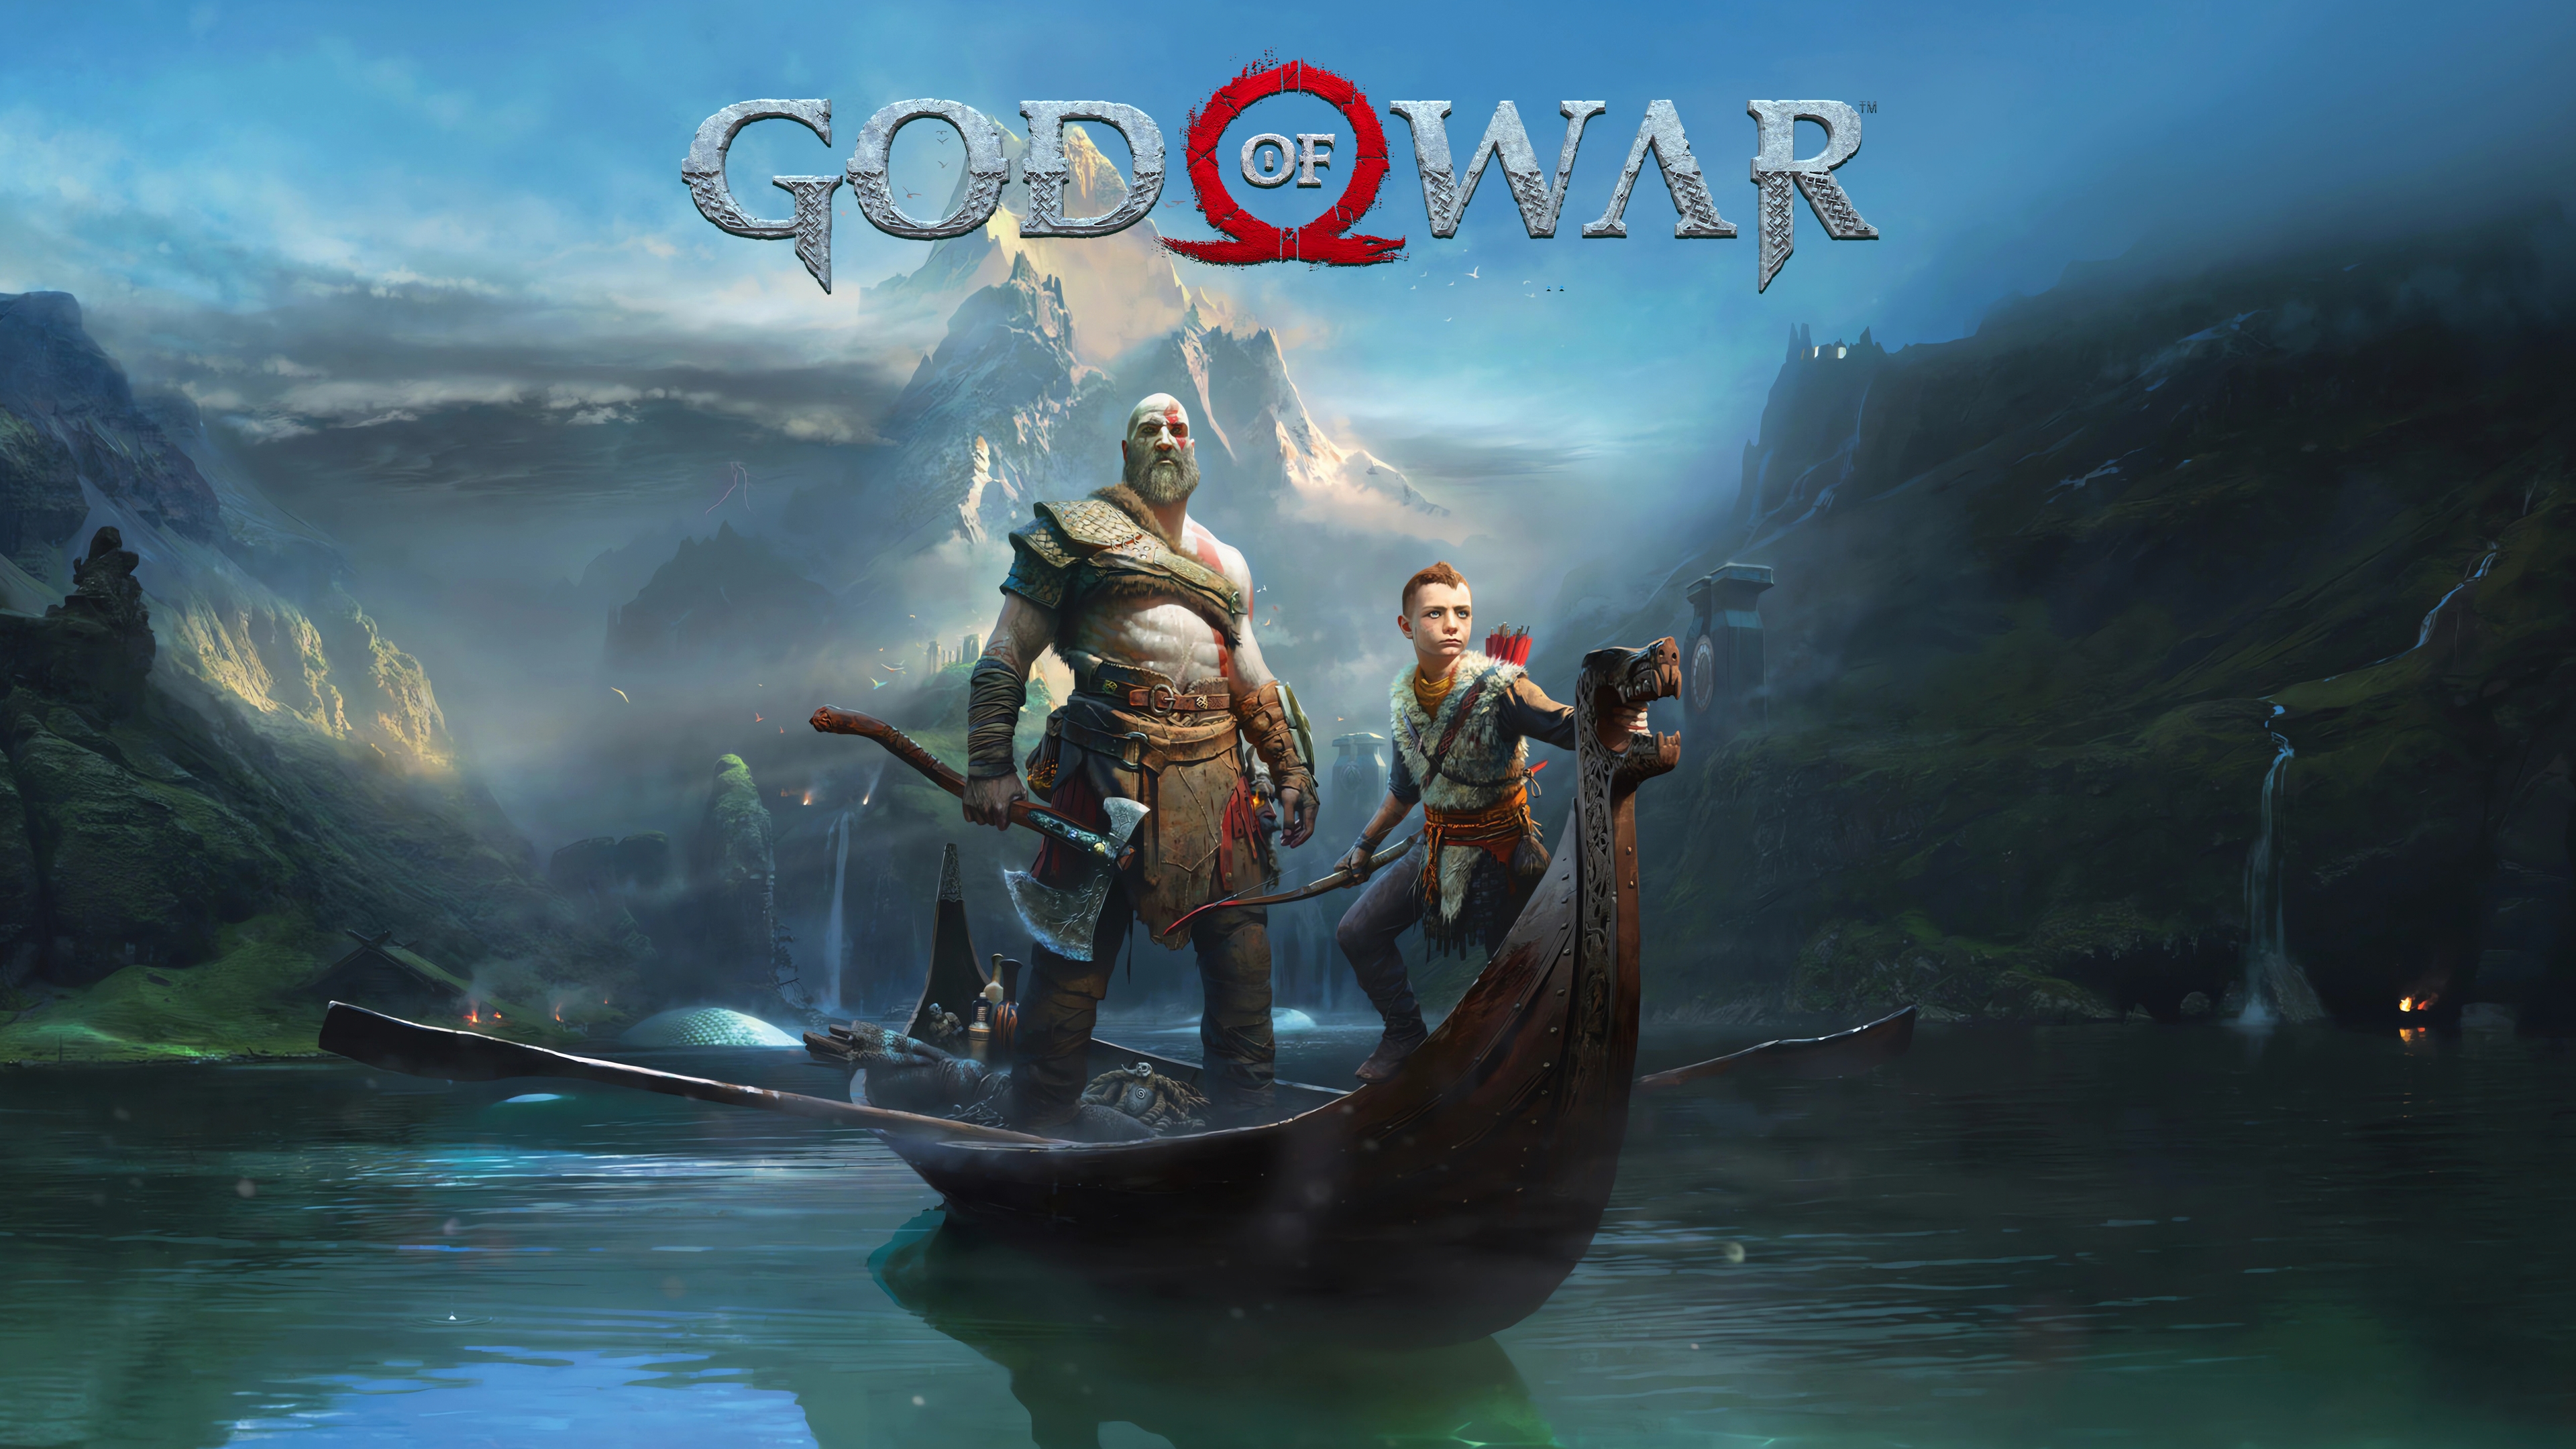 Is God of War in Steam?